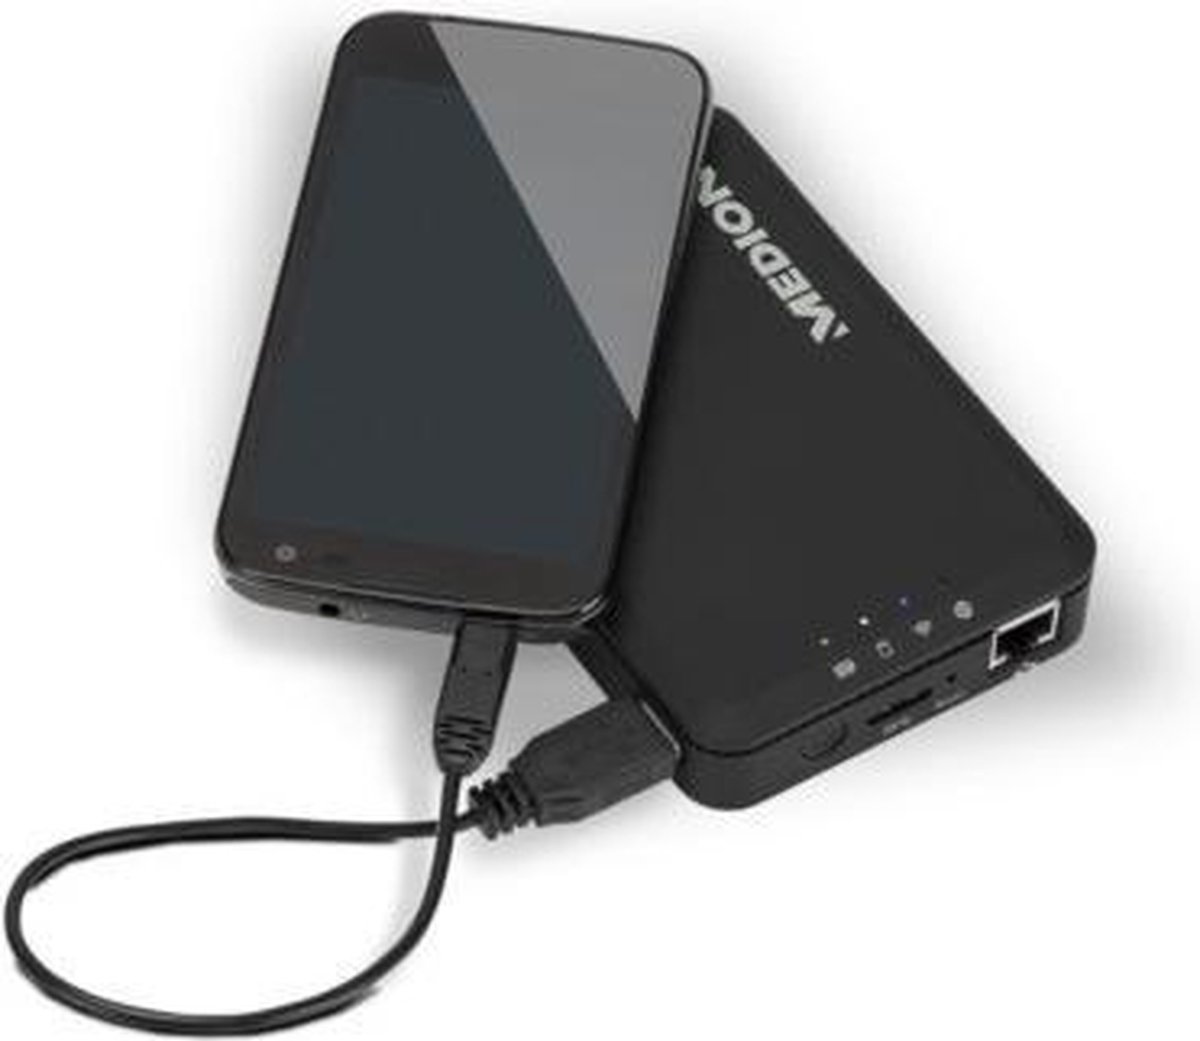 Druif samenzwering gids MEDION LIFE S88400 Externe USB 3.0 WiFi harde schijf 2 TB (2,5") | bol.com